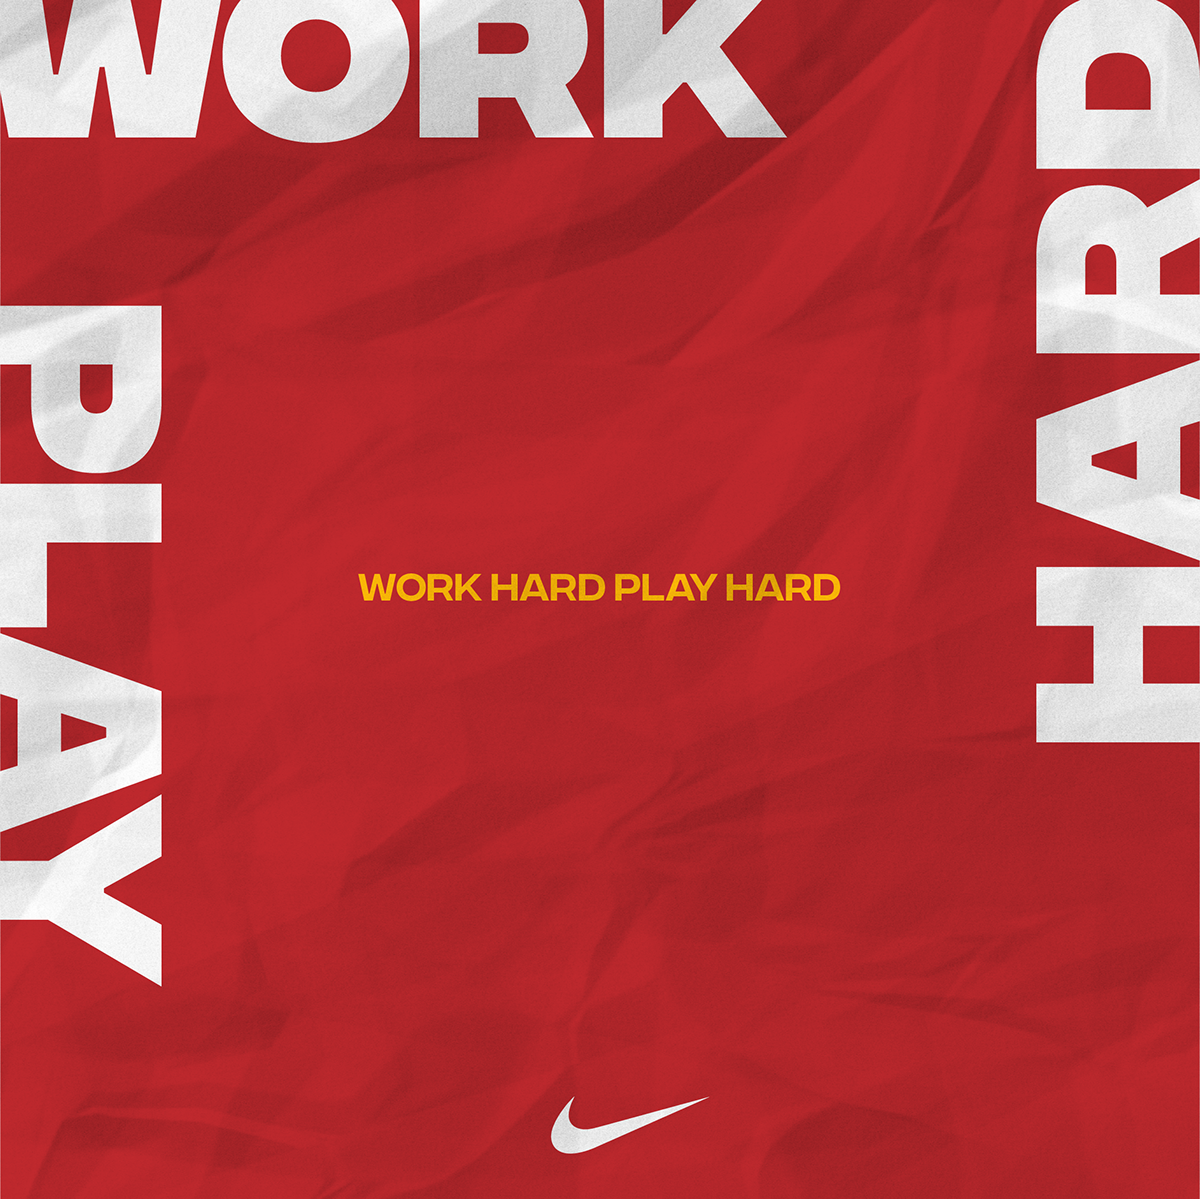 Nike design graphic design  poster Poster Design quote nike design designer posters Collection